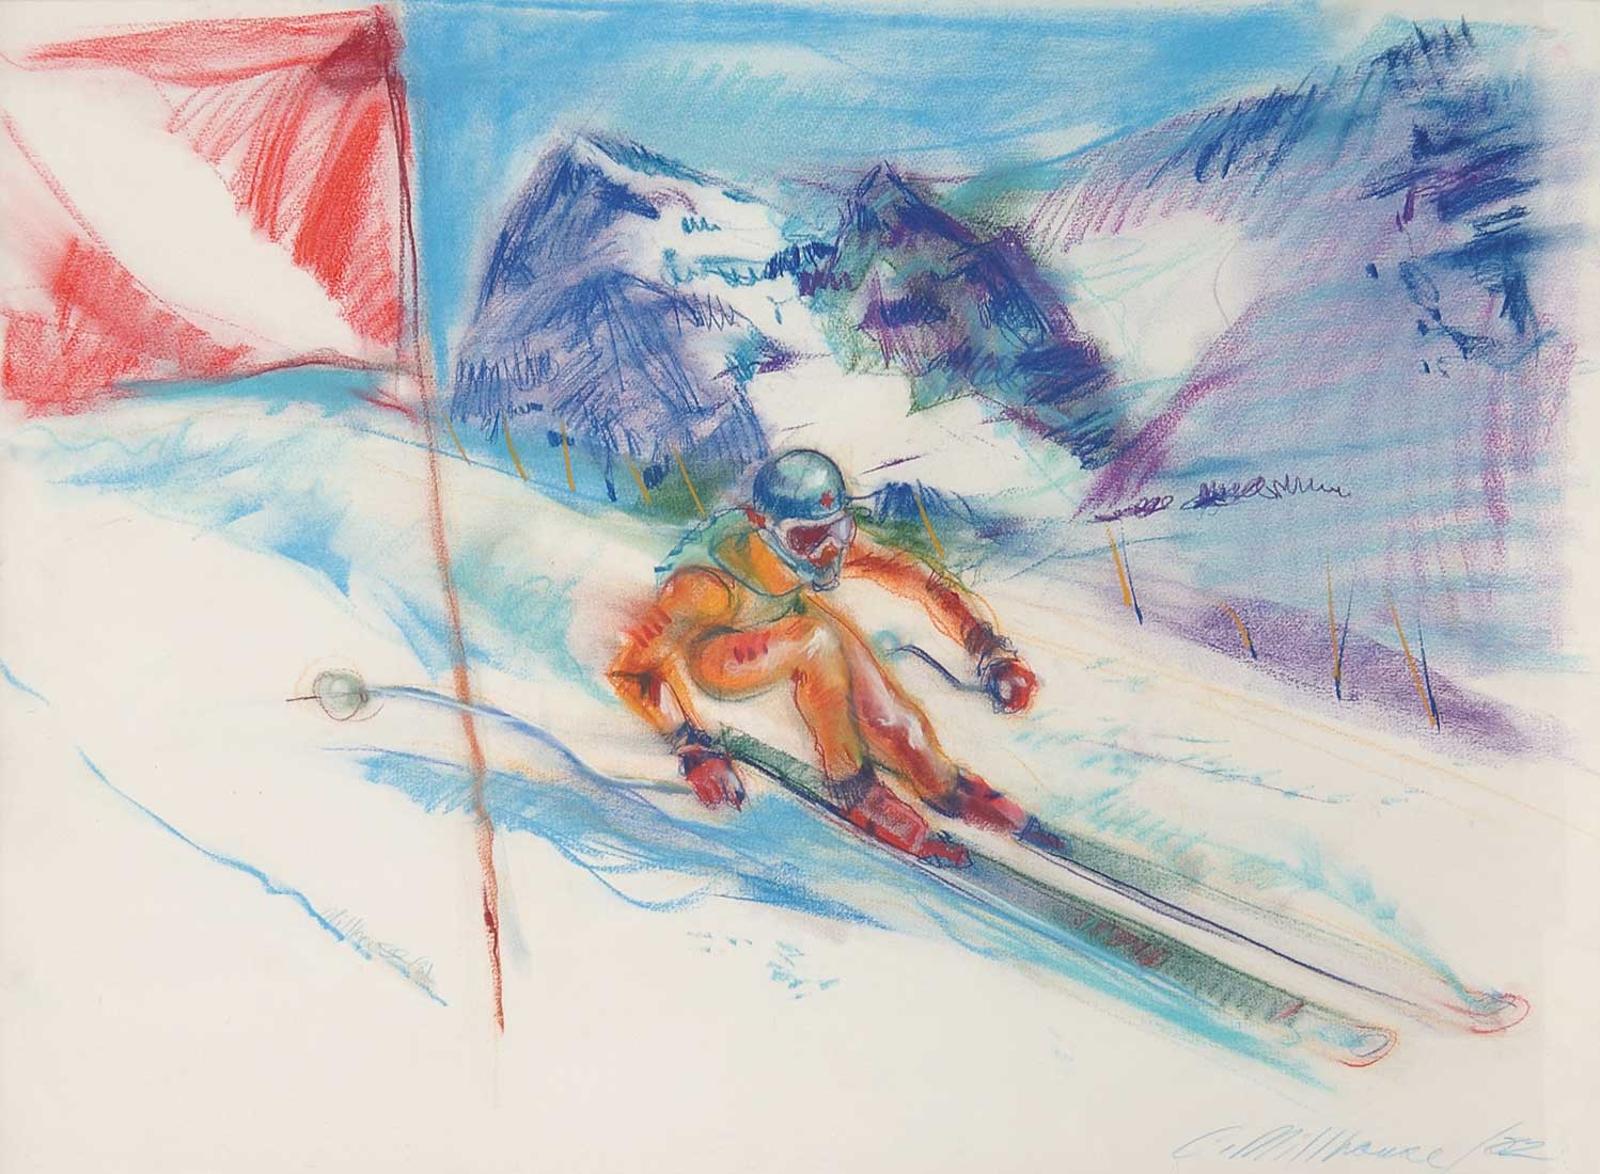 C. Millhouse - Untitled - Downhill Ski Racer